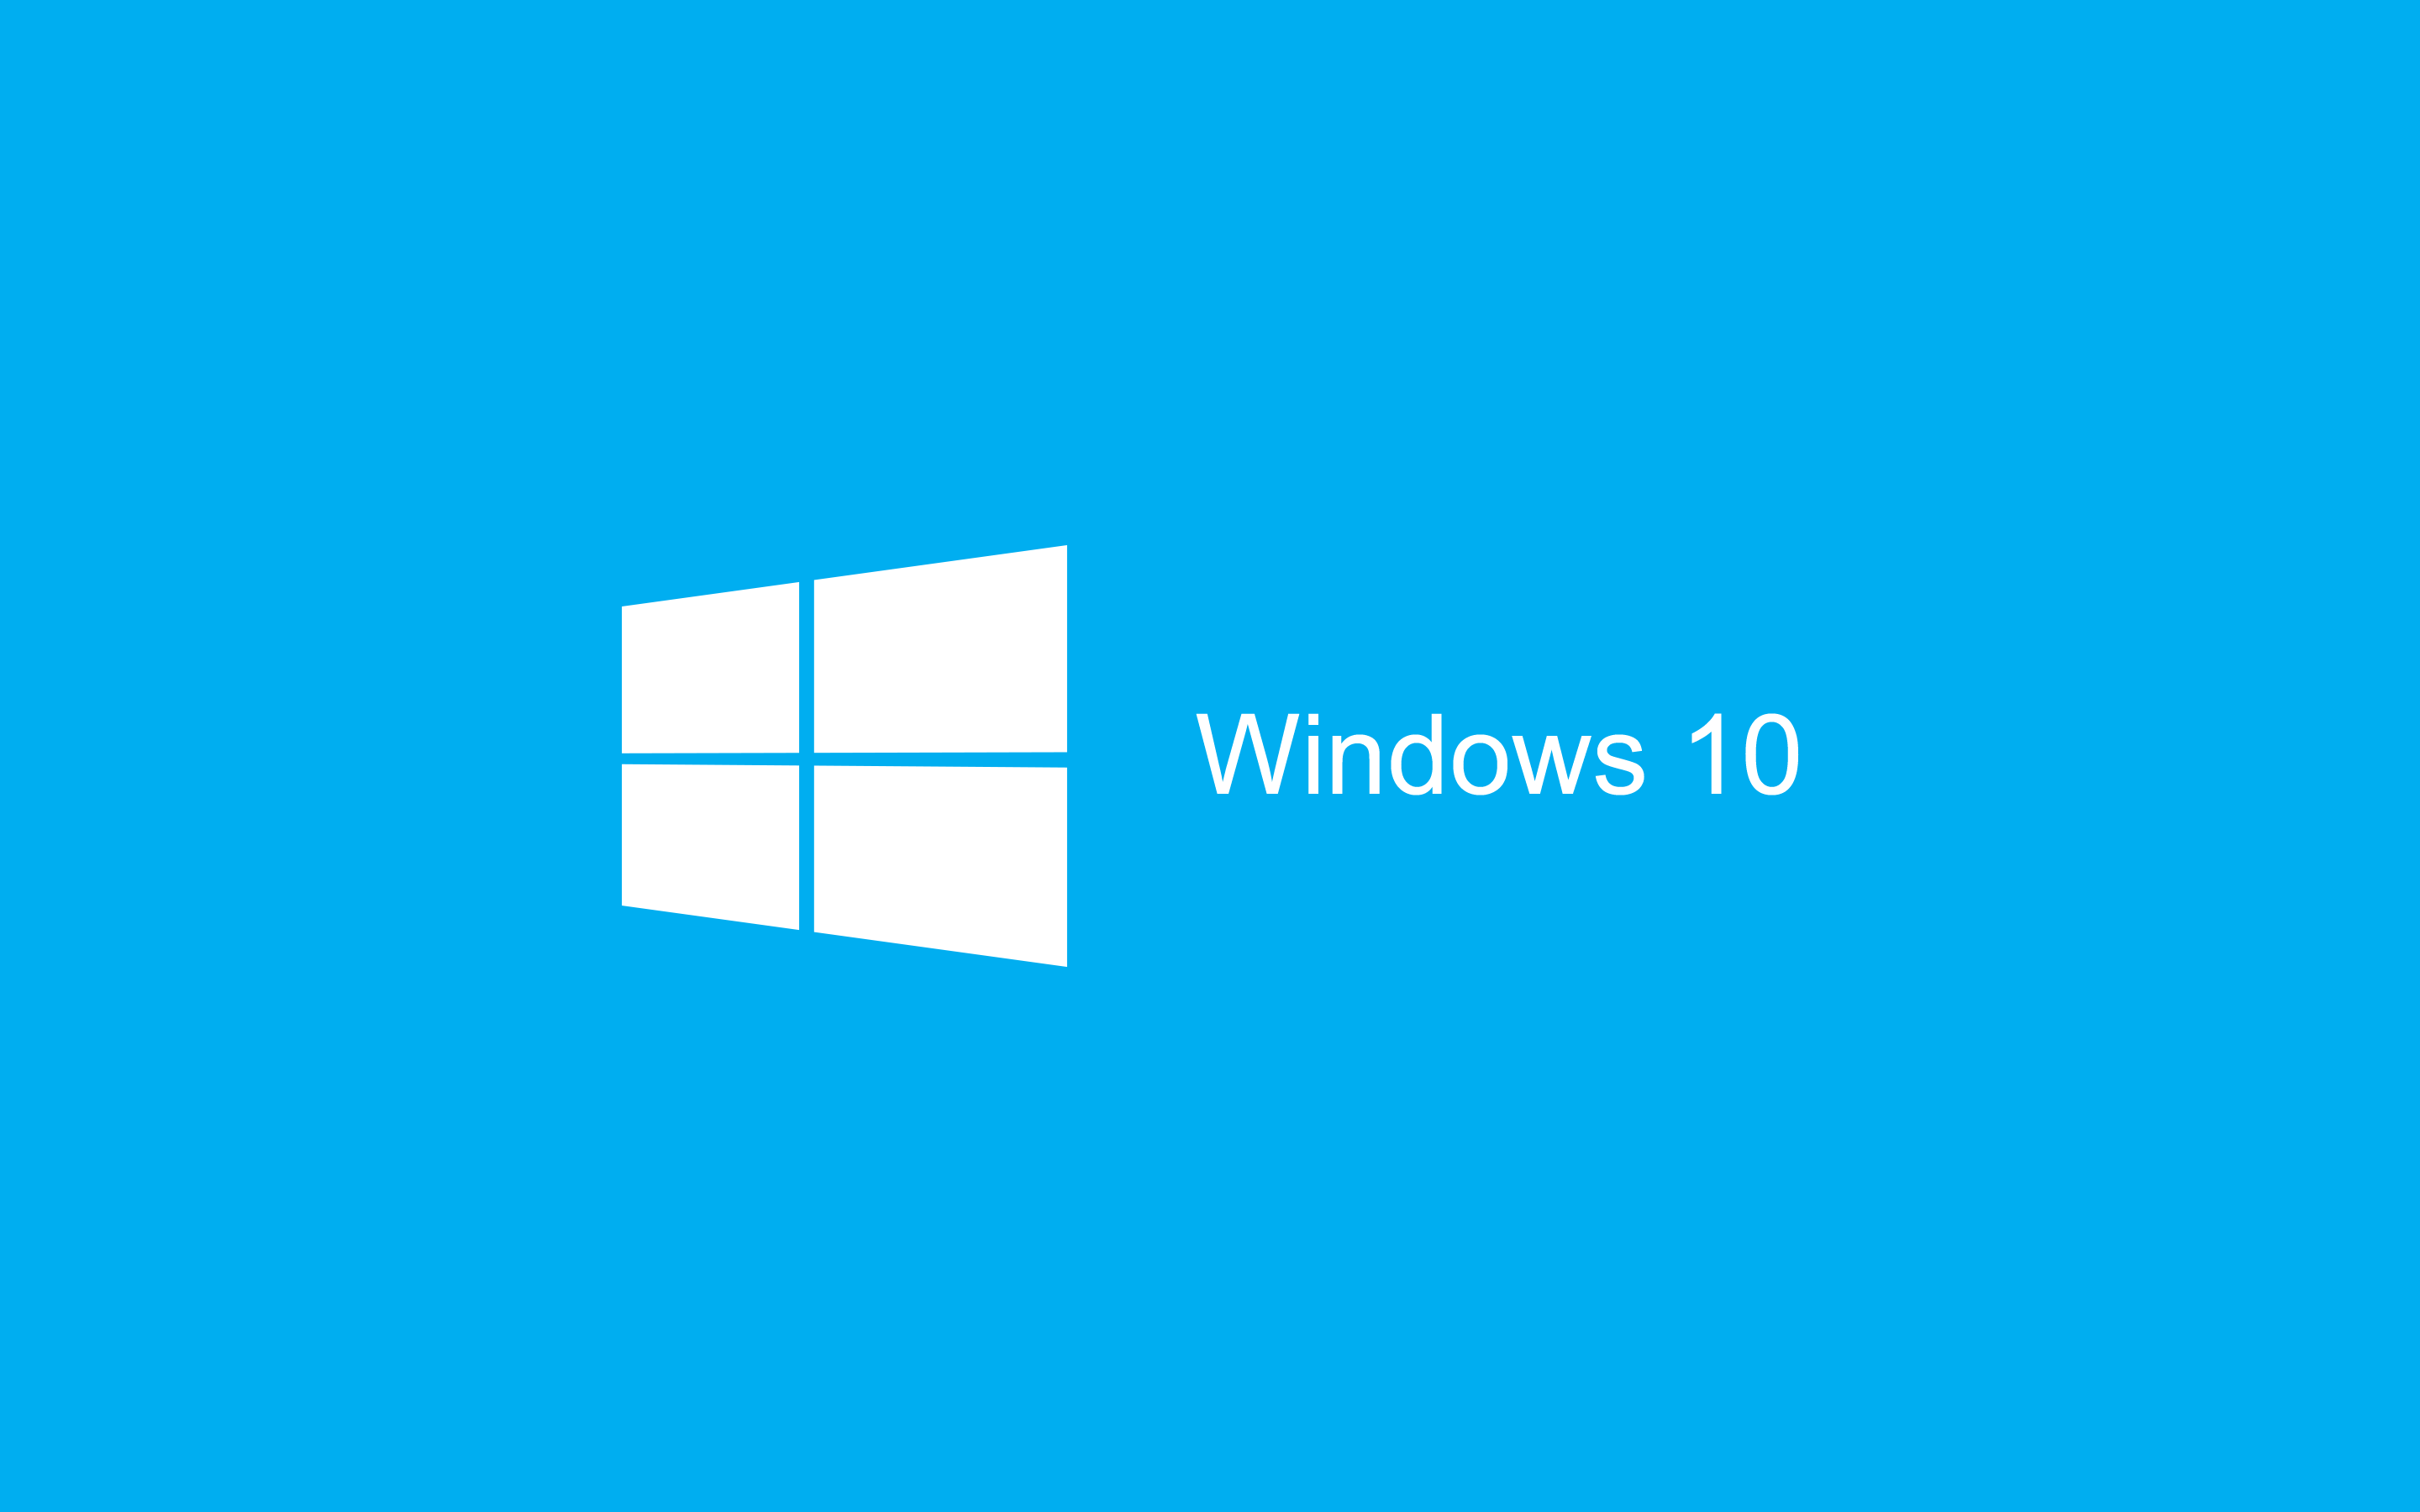 Windows 10 Free Upgrade for Lumia